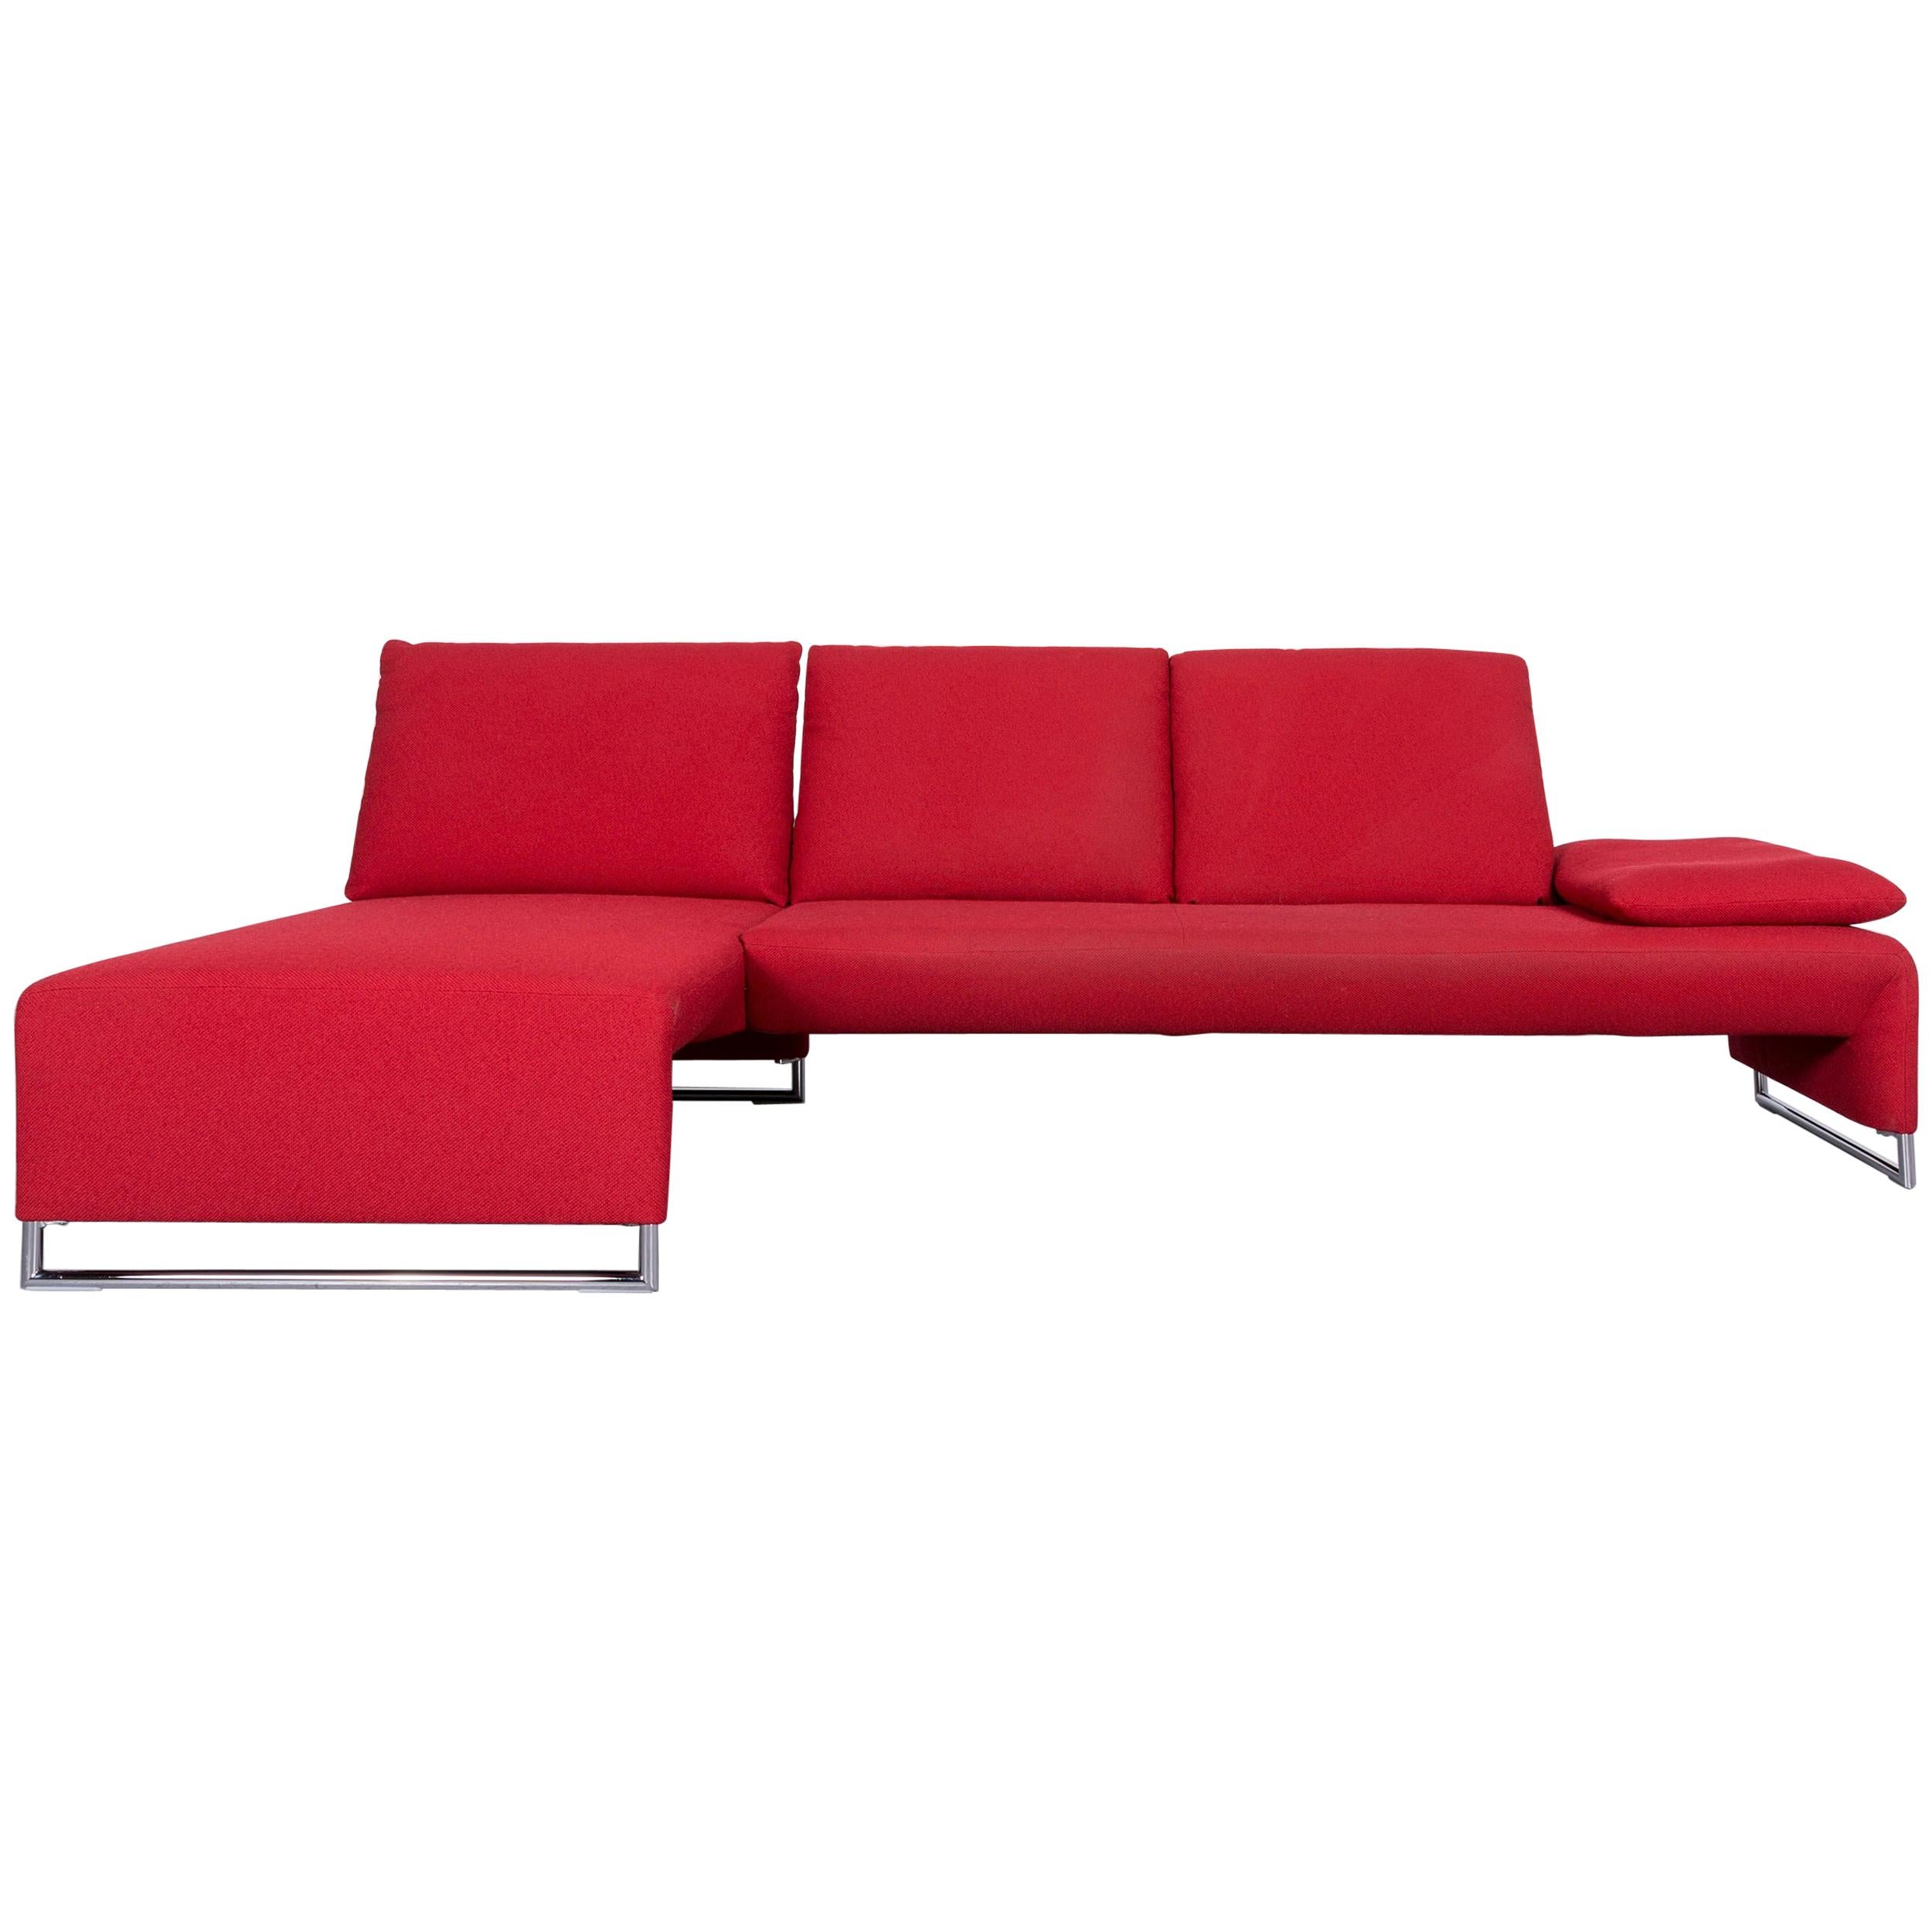 Koinor Designer Fabric Sofa in Red Corner, Sofa Couch For Sale